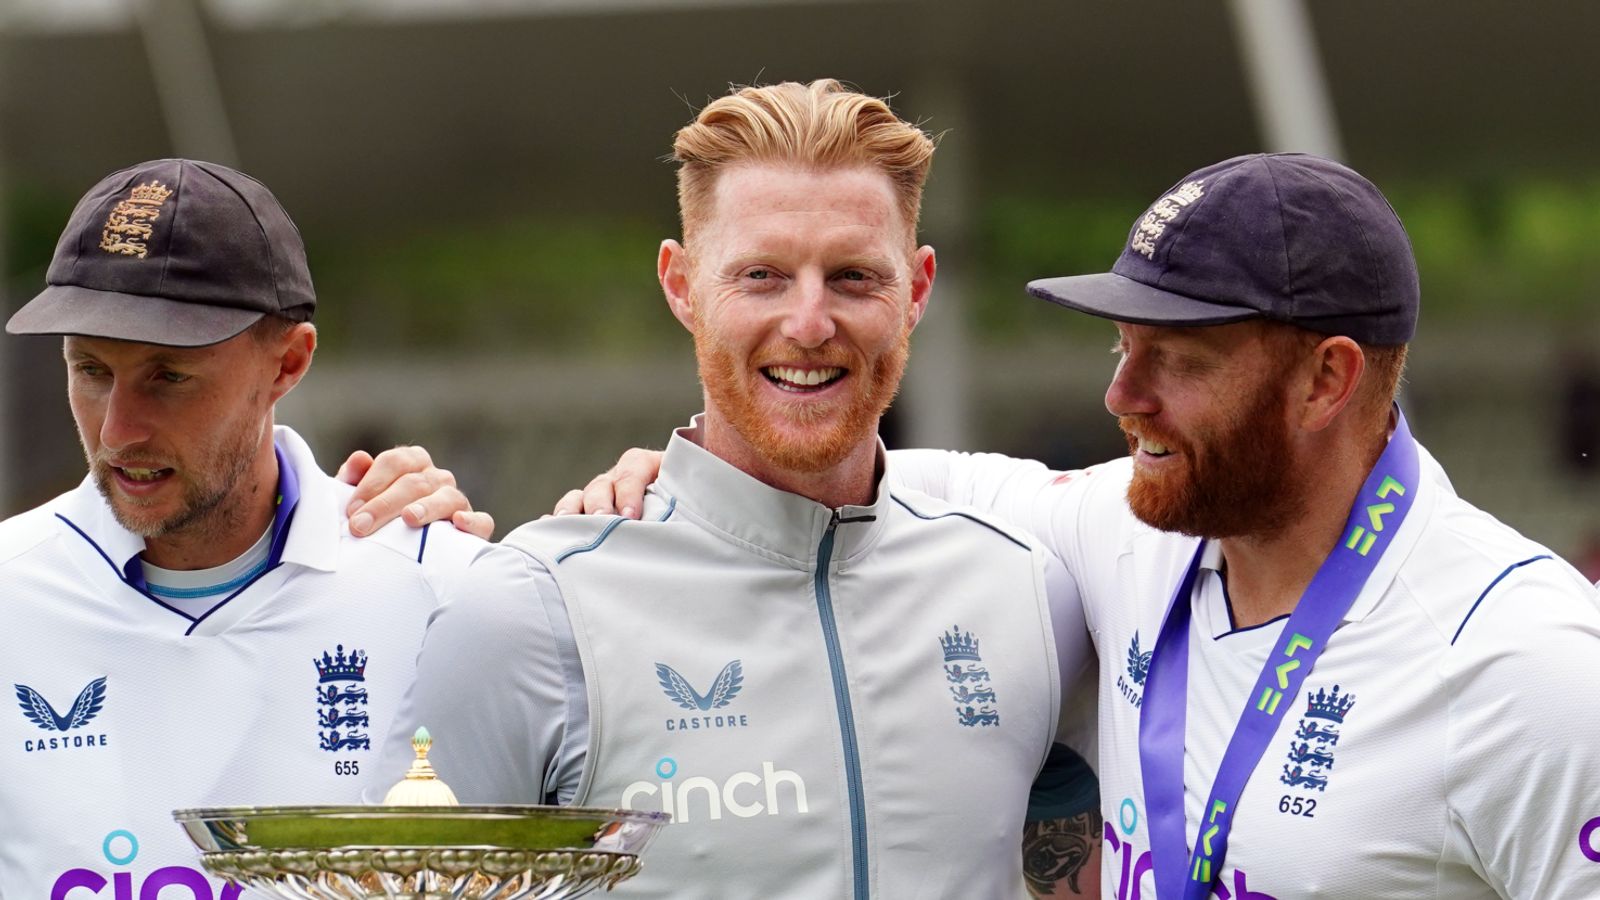 England stars Ben Stokes, Joe Root and Jonny Bairstow ‘excited’ for ODI series return against India, says head coach Matthew Mott | Cricket News